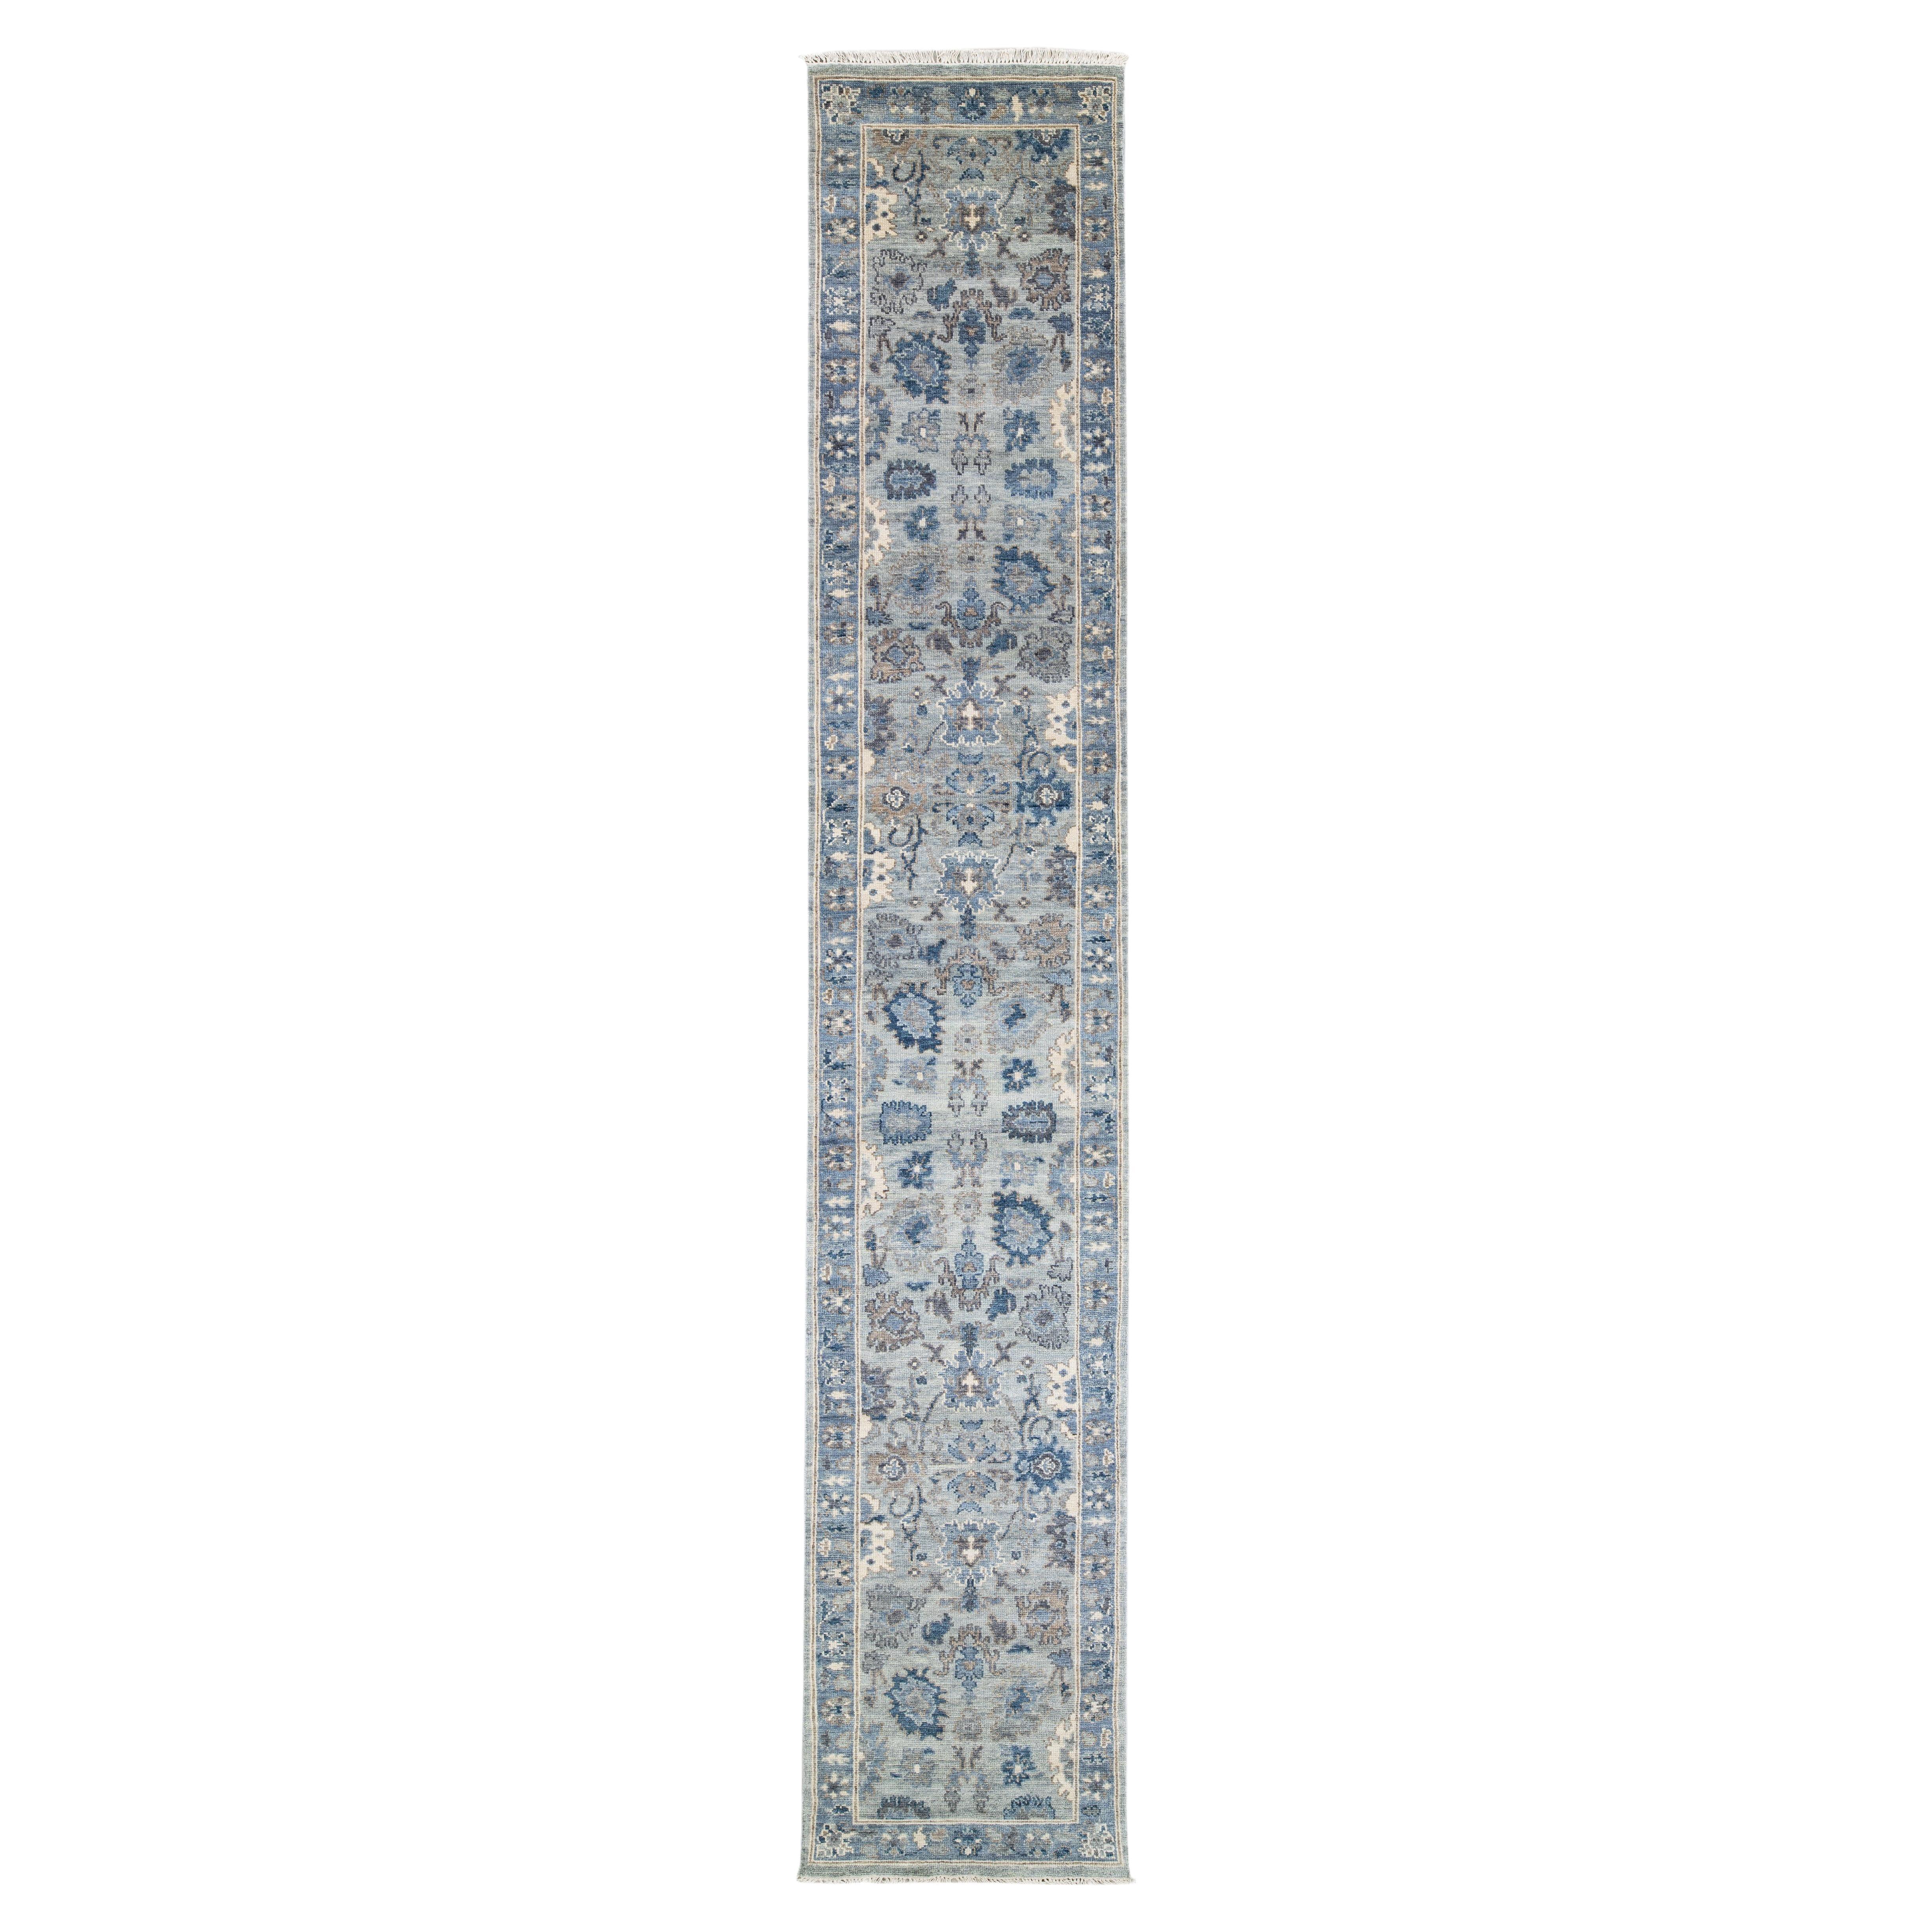 Modern Silver And Blue Oushak style Handmade Floral Motif Wool Runner